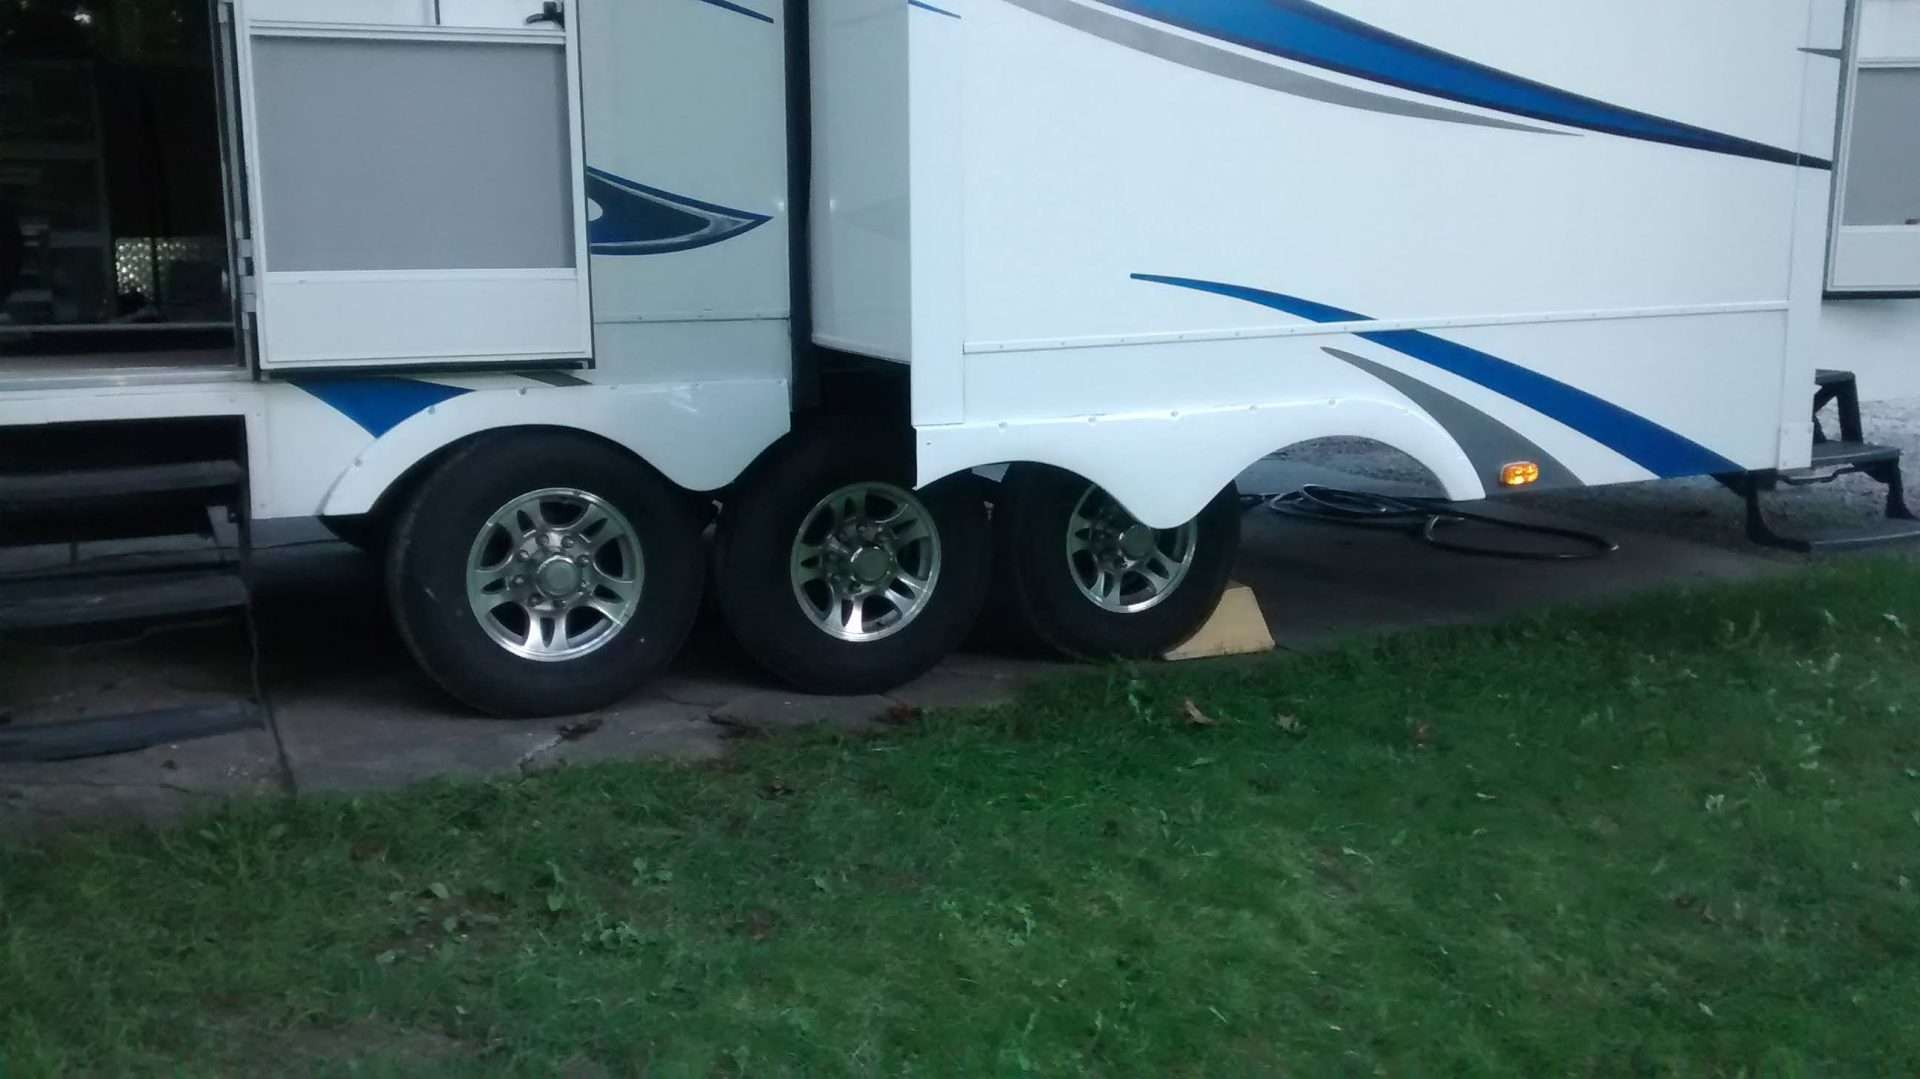 RV parked with wheel chocks